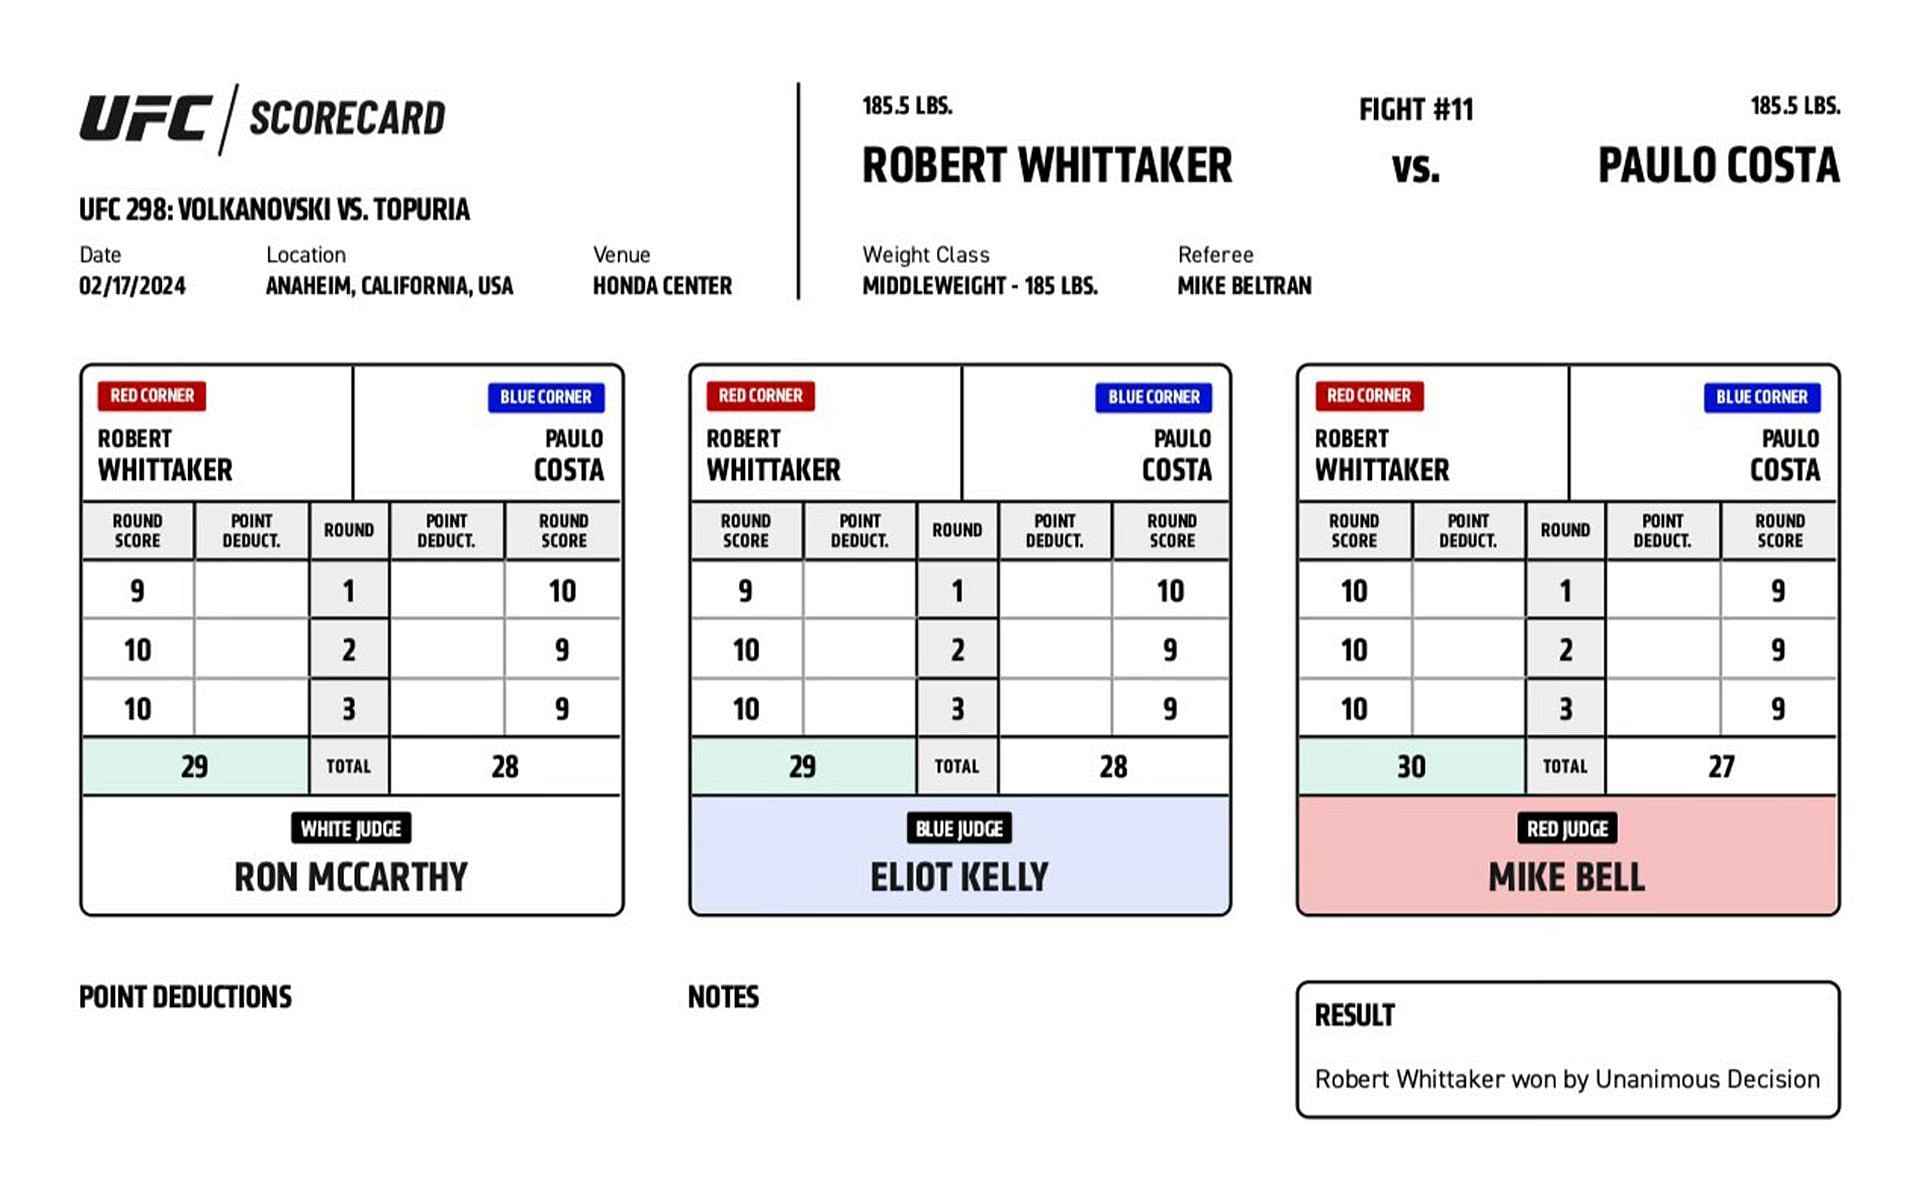 Robert Whittaker def. Paulo Costa via unanimous decision (30-27, 29-28 X 2)